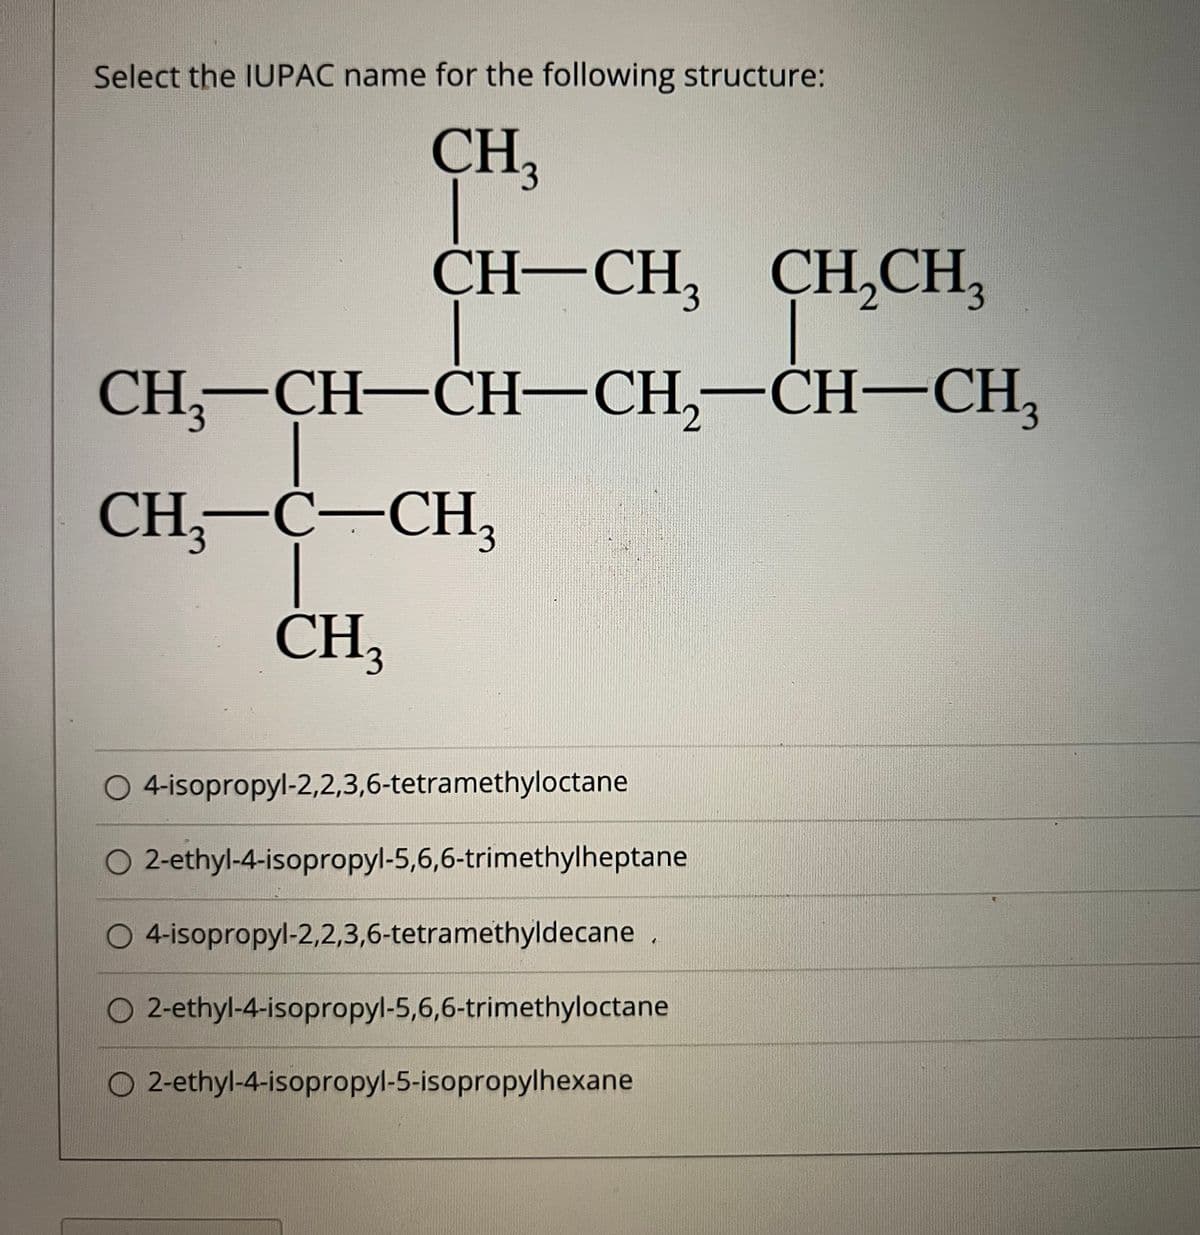 Select the IUPAC name for the following structure:
CH,
CH-CH, ҪН,СH,
CH,CH,
CH—СH—СH—CH,—СH—СН,
-CH—СH—CH,
-CH-CH,
CH—С—СH,
CH,
3.
O 4 isopropyl-2,2,3,6-tetramethyloctane
O 2-ethyl-4-isopropyl-5,6,6-trimethylheptane
O 4-isopropyl-2,2,3,6-tetramethyldecane .
O 2-ethyl-4-isopropyl-5,6,6-trimethyloctane
O 2-ethyl-4-isopropyl-5-isopropylhexane
